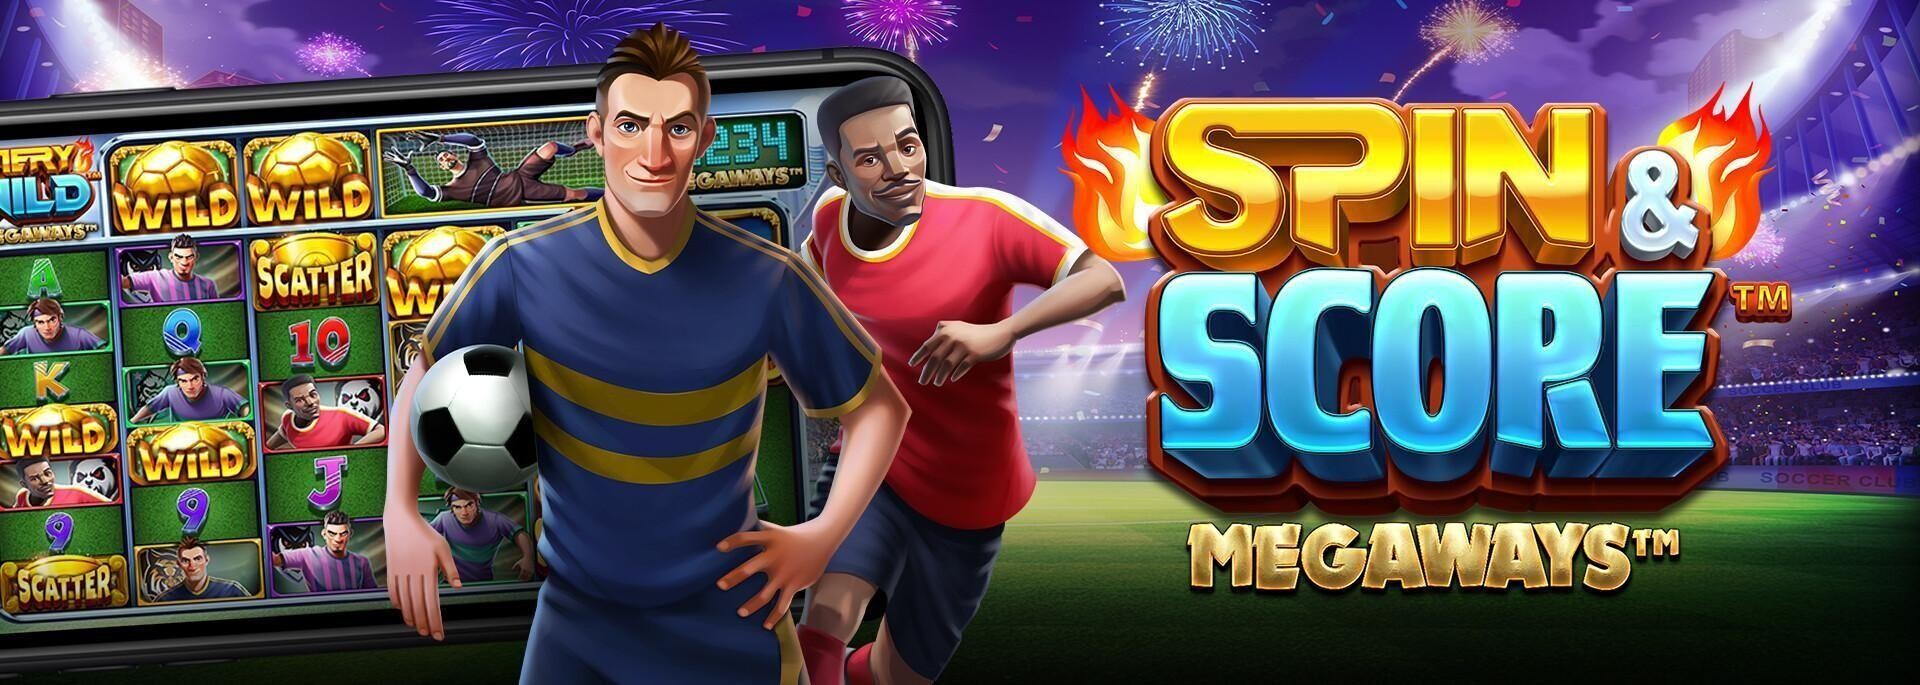 Spin & Score Megaways slot banner